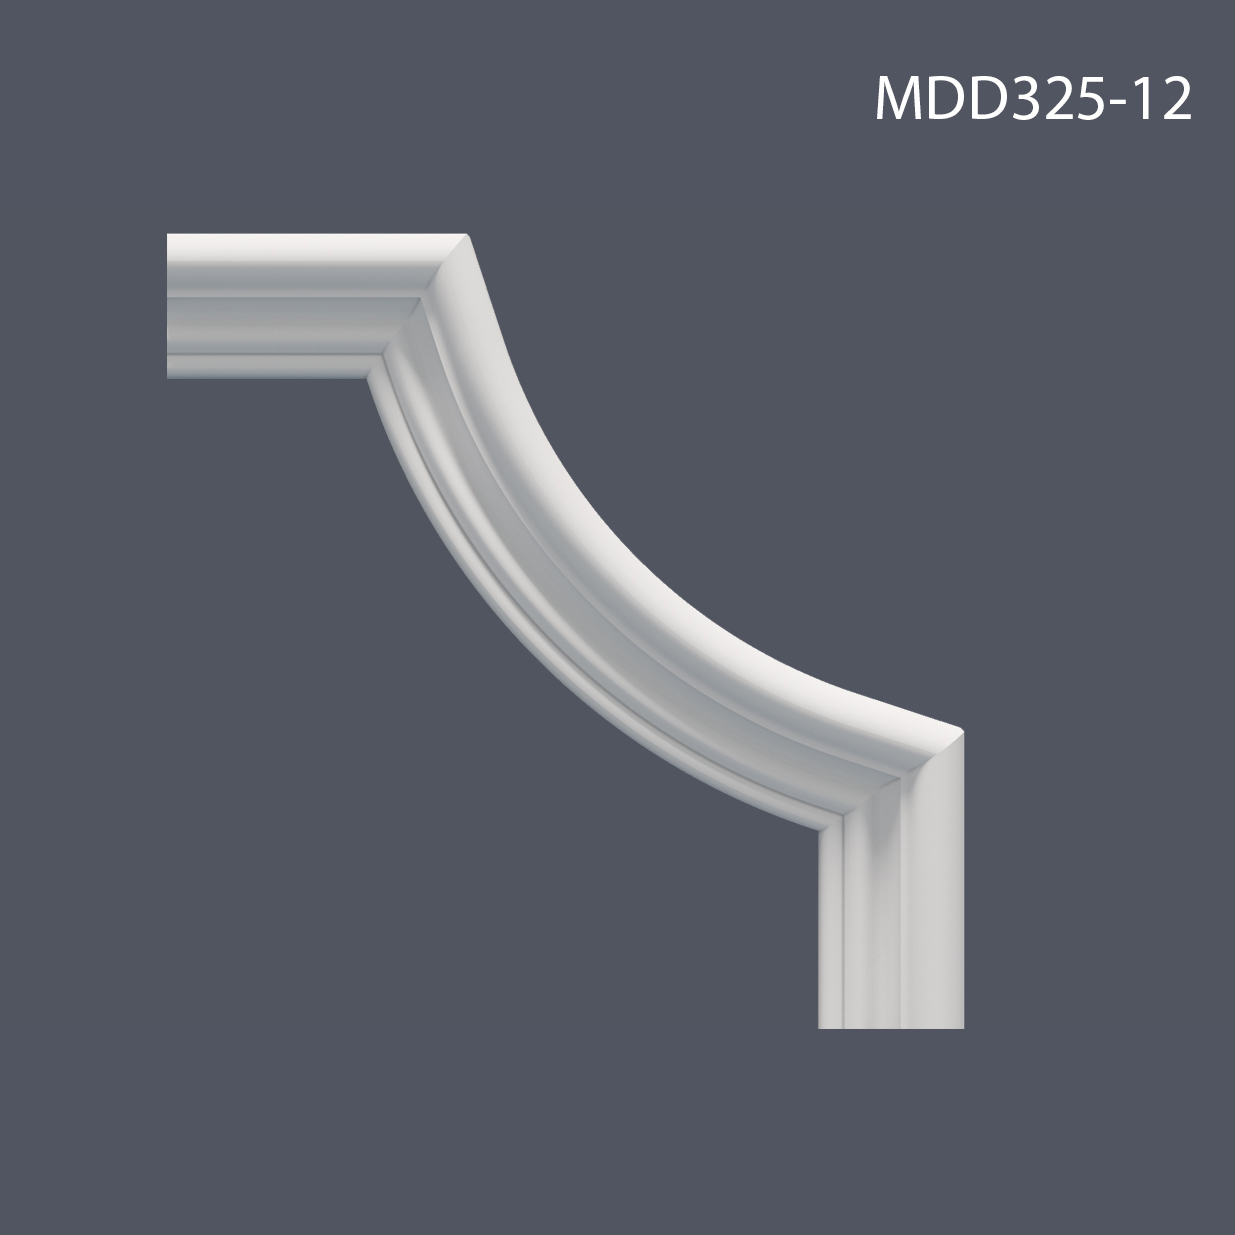 Coltar decorativ MDD325-12 pentru braul MDD325F, 23 X 23 X 4.1 cm, Mardom Decor